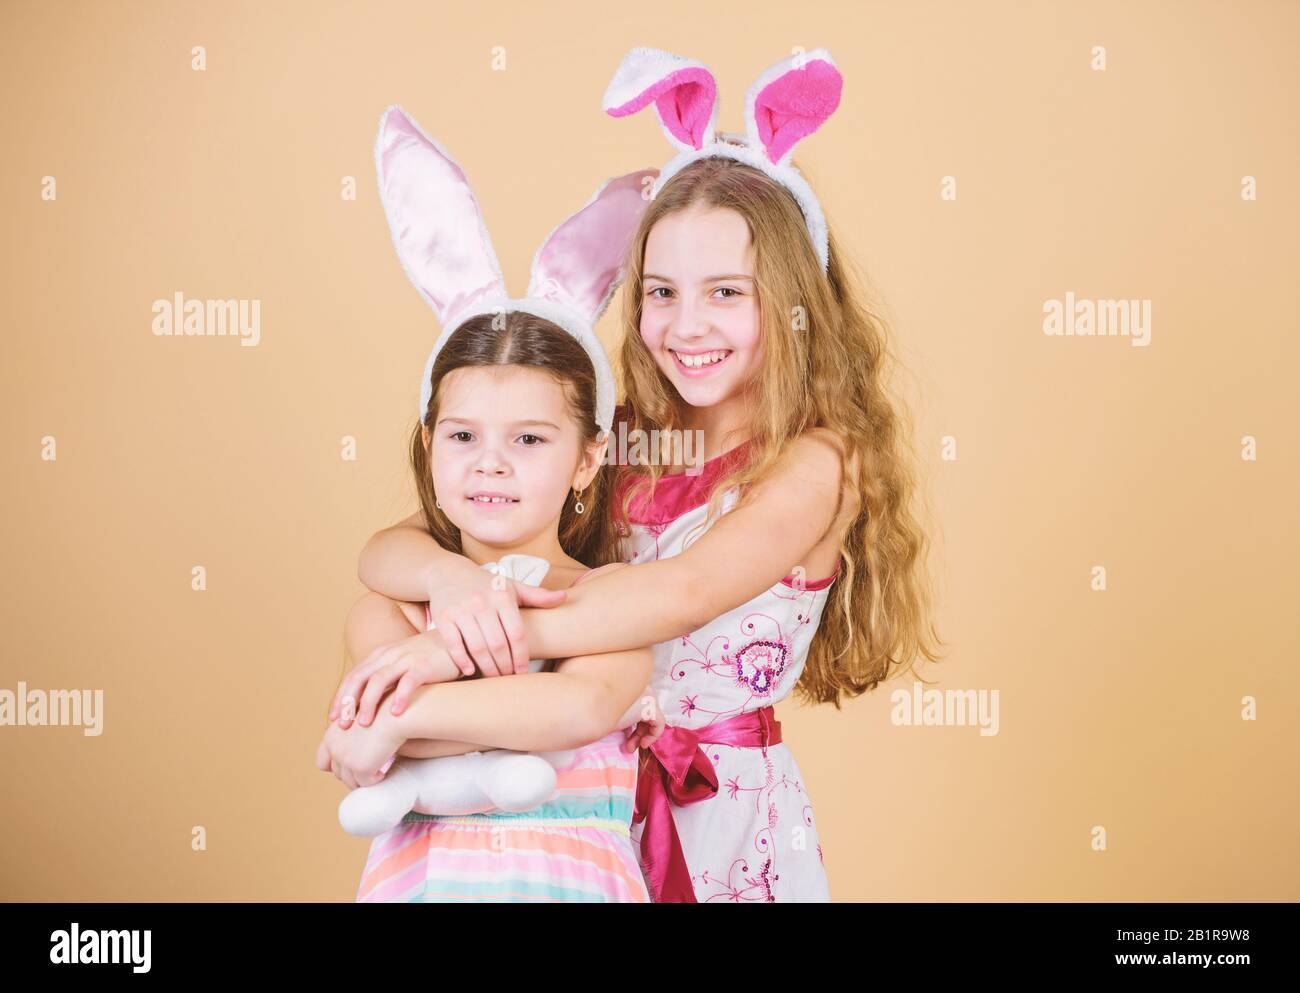 Bunny Playboy Adults Child White Rabbit Ears Headband Easter Birthday Hen Party